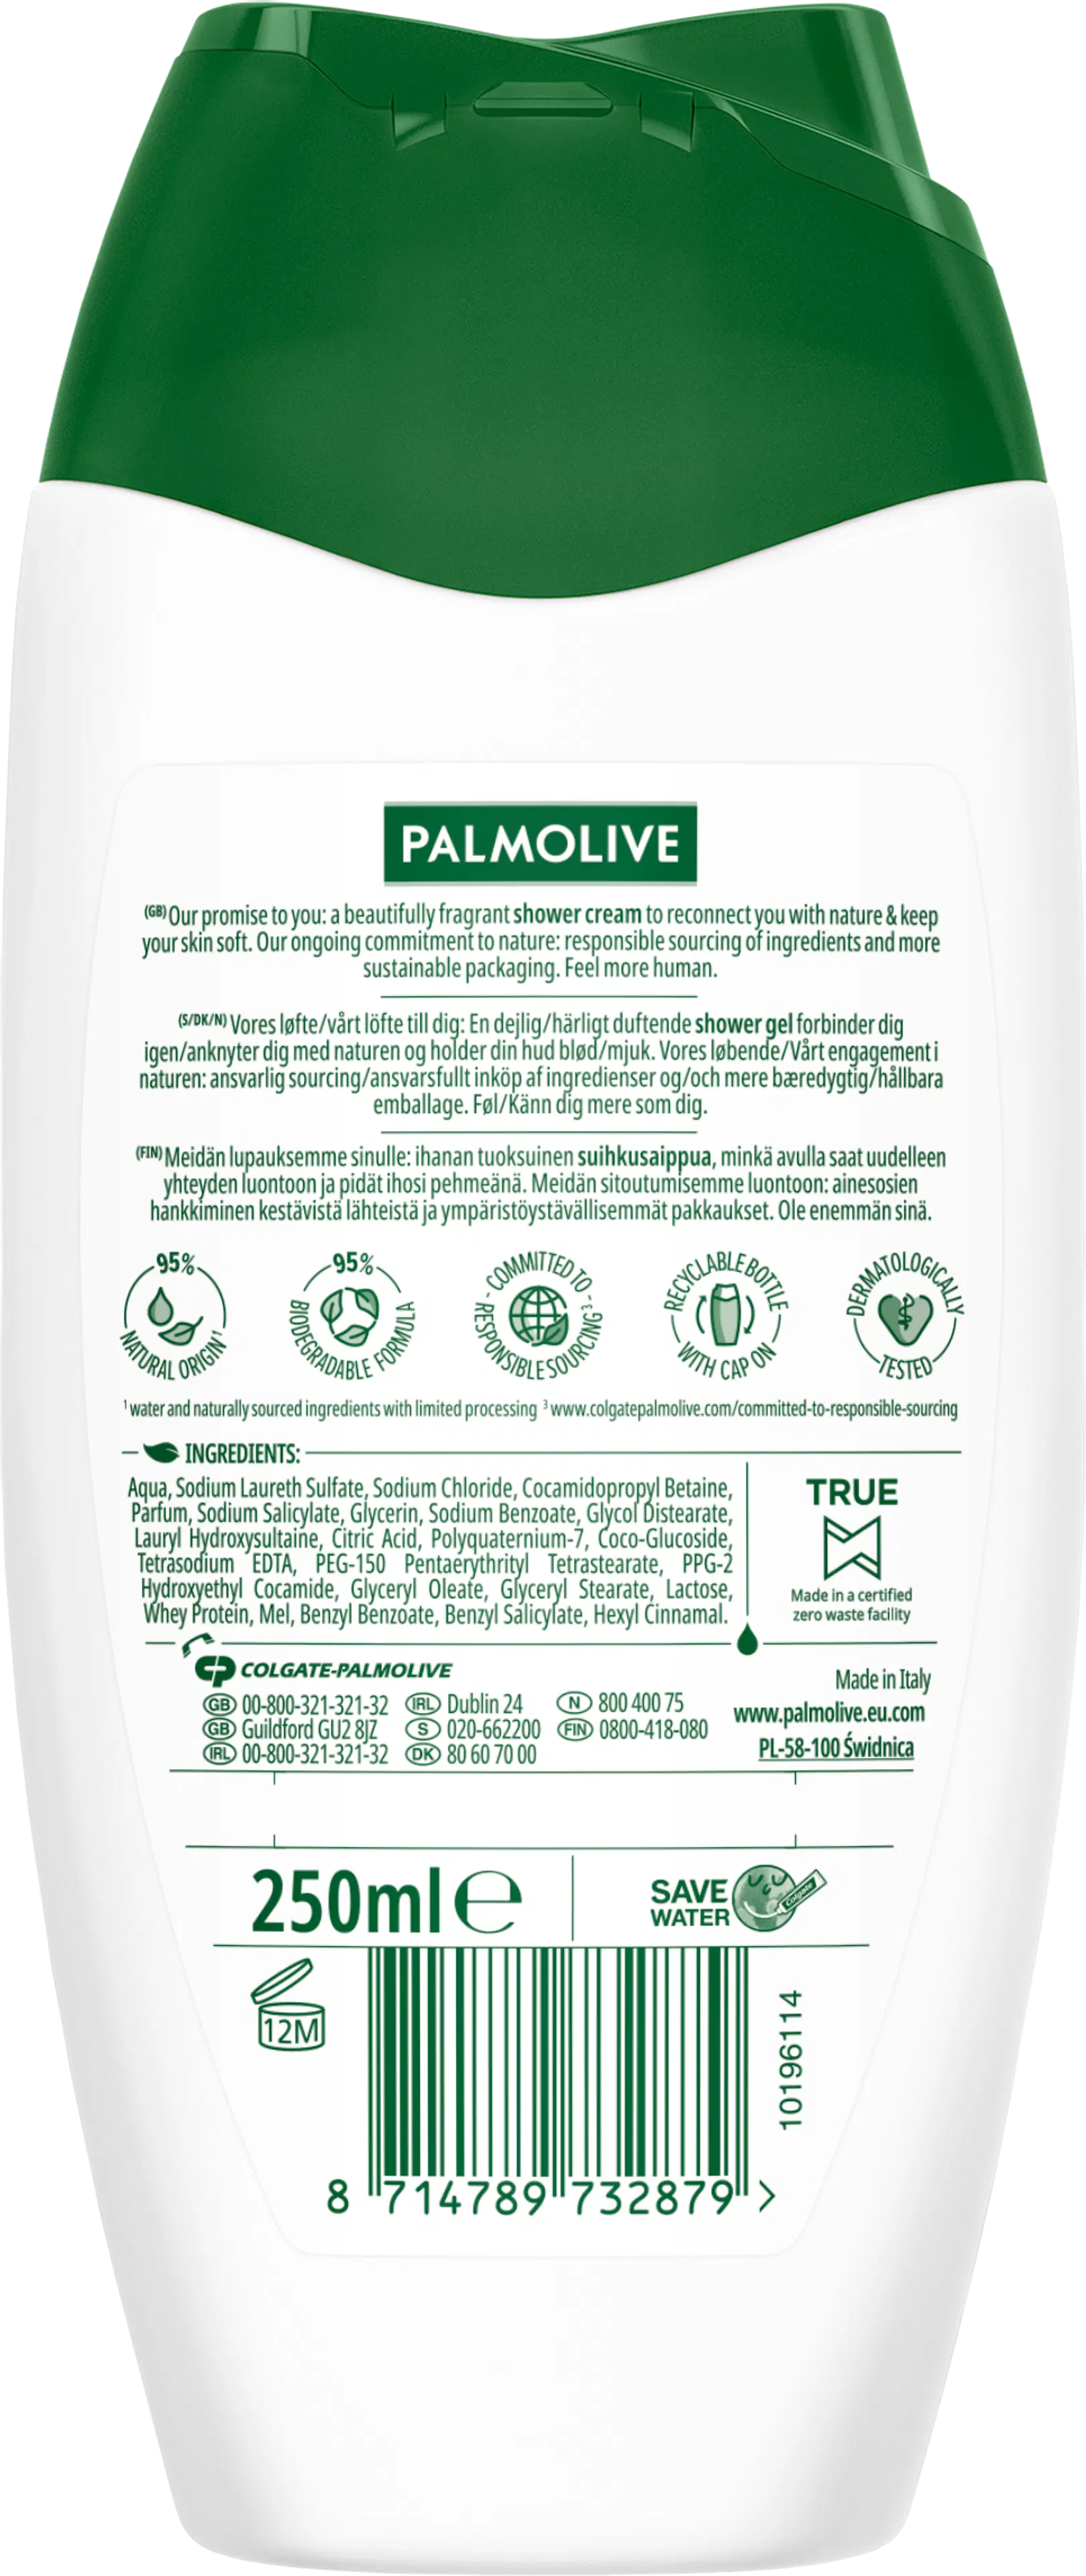 Palmolive Naturals Milk & Honey suihkusaippua 250 ml